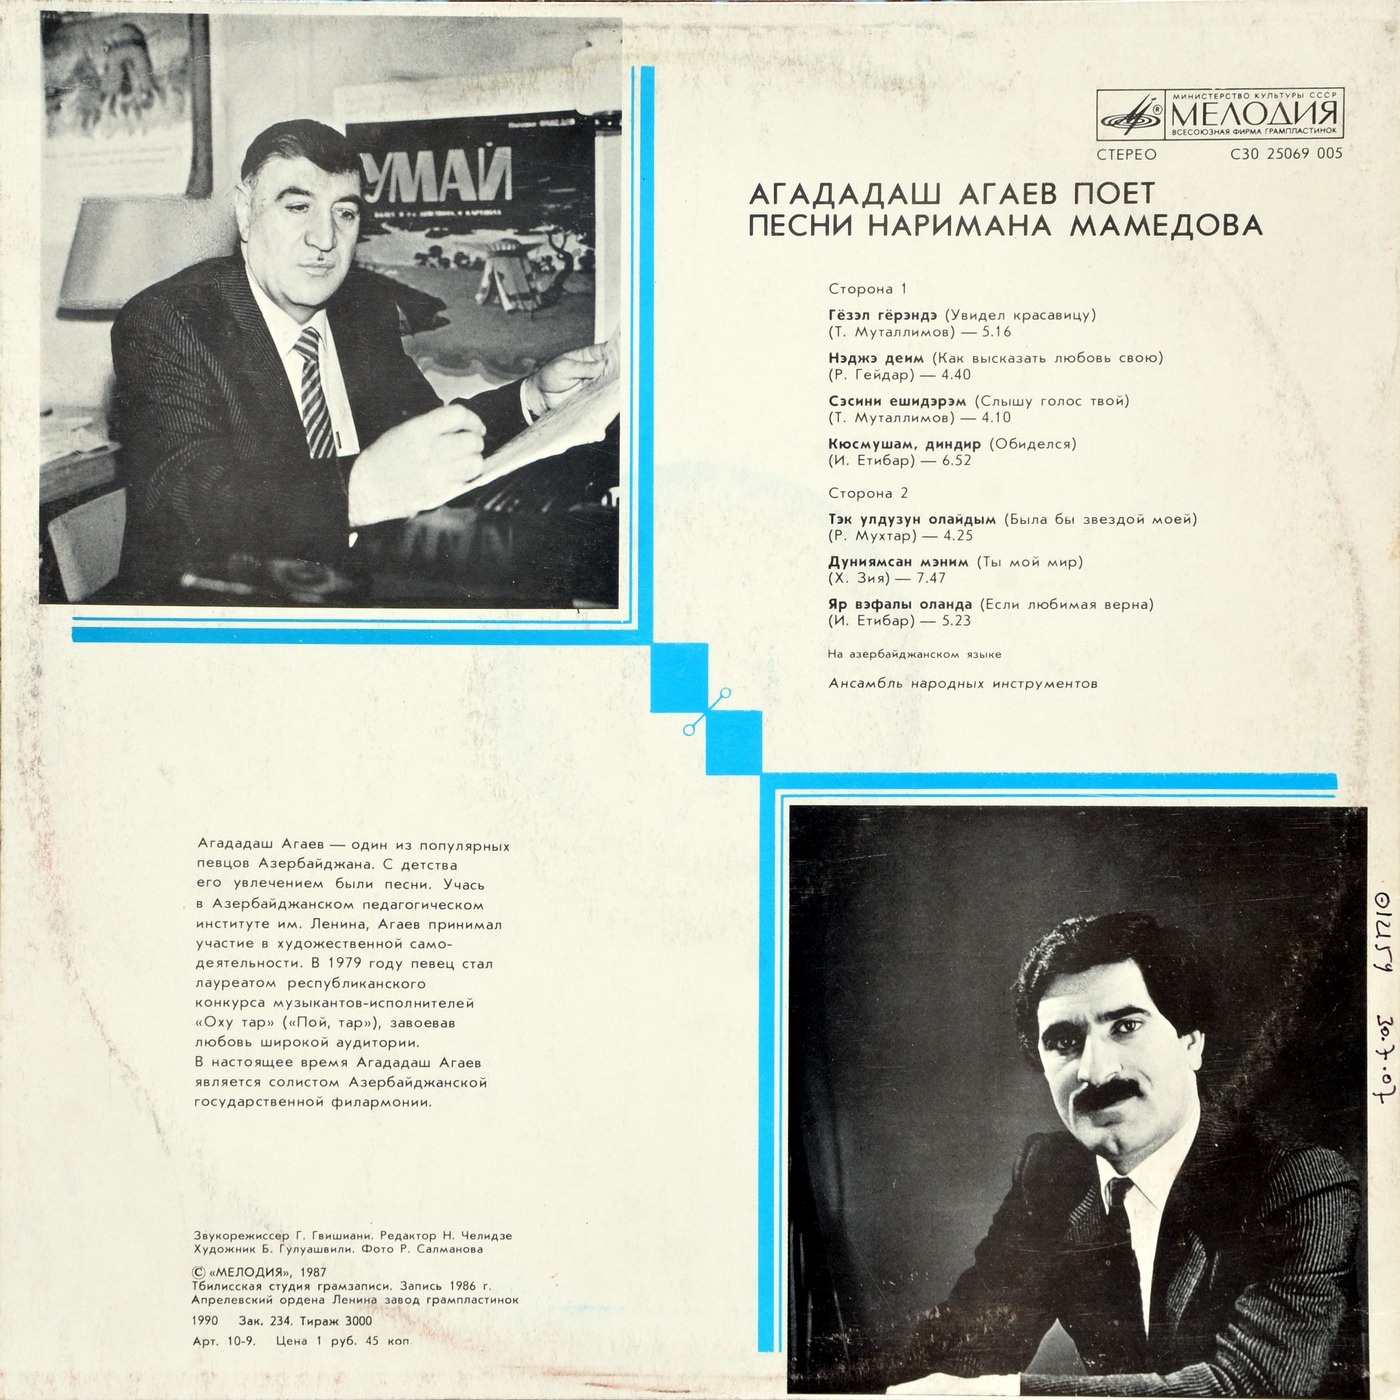 Агададаш АГАЕВ «Песни Наримана Мамедова» — на азербайджанском языке